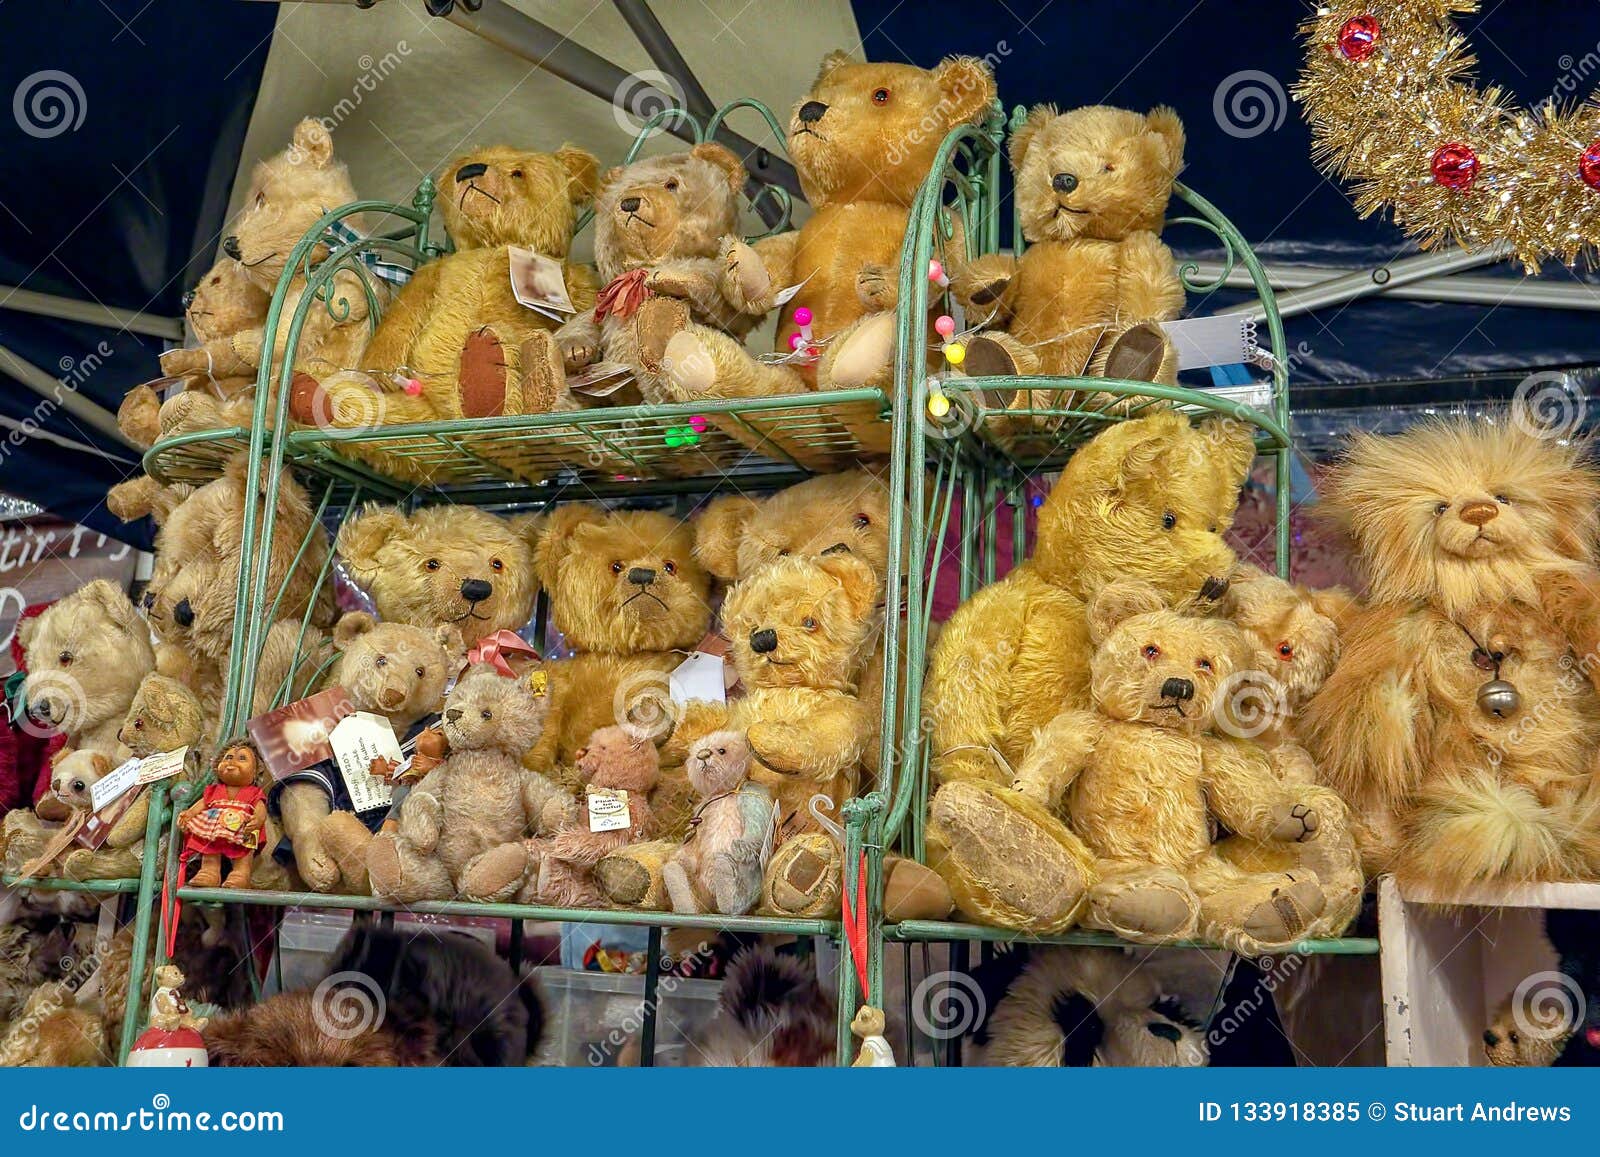 plush bears for sale